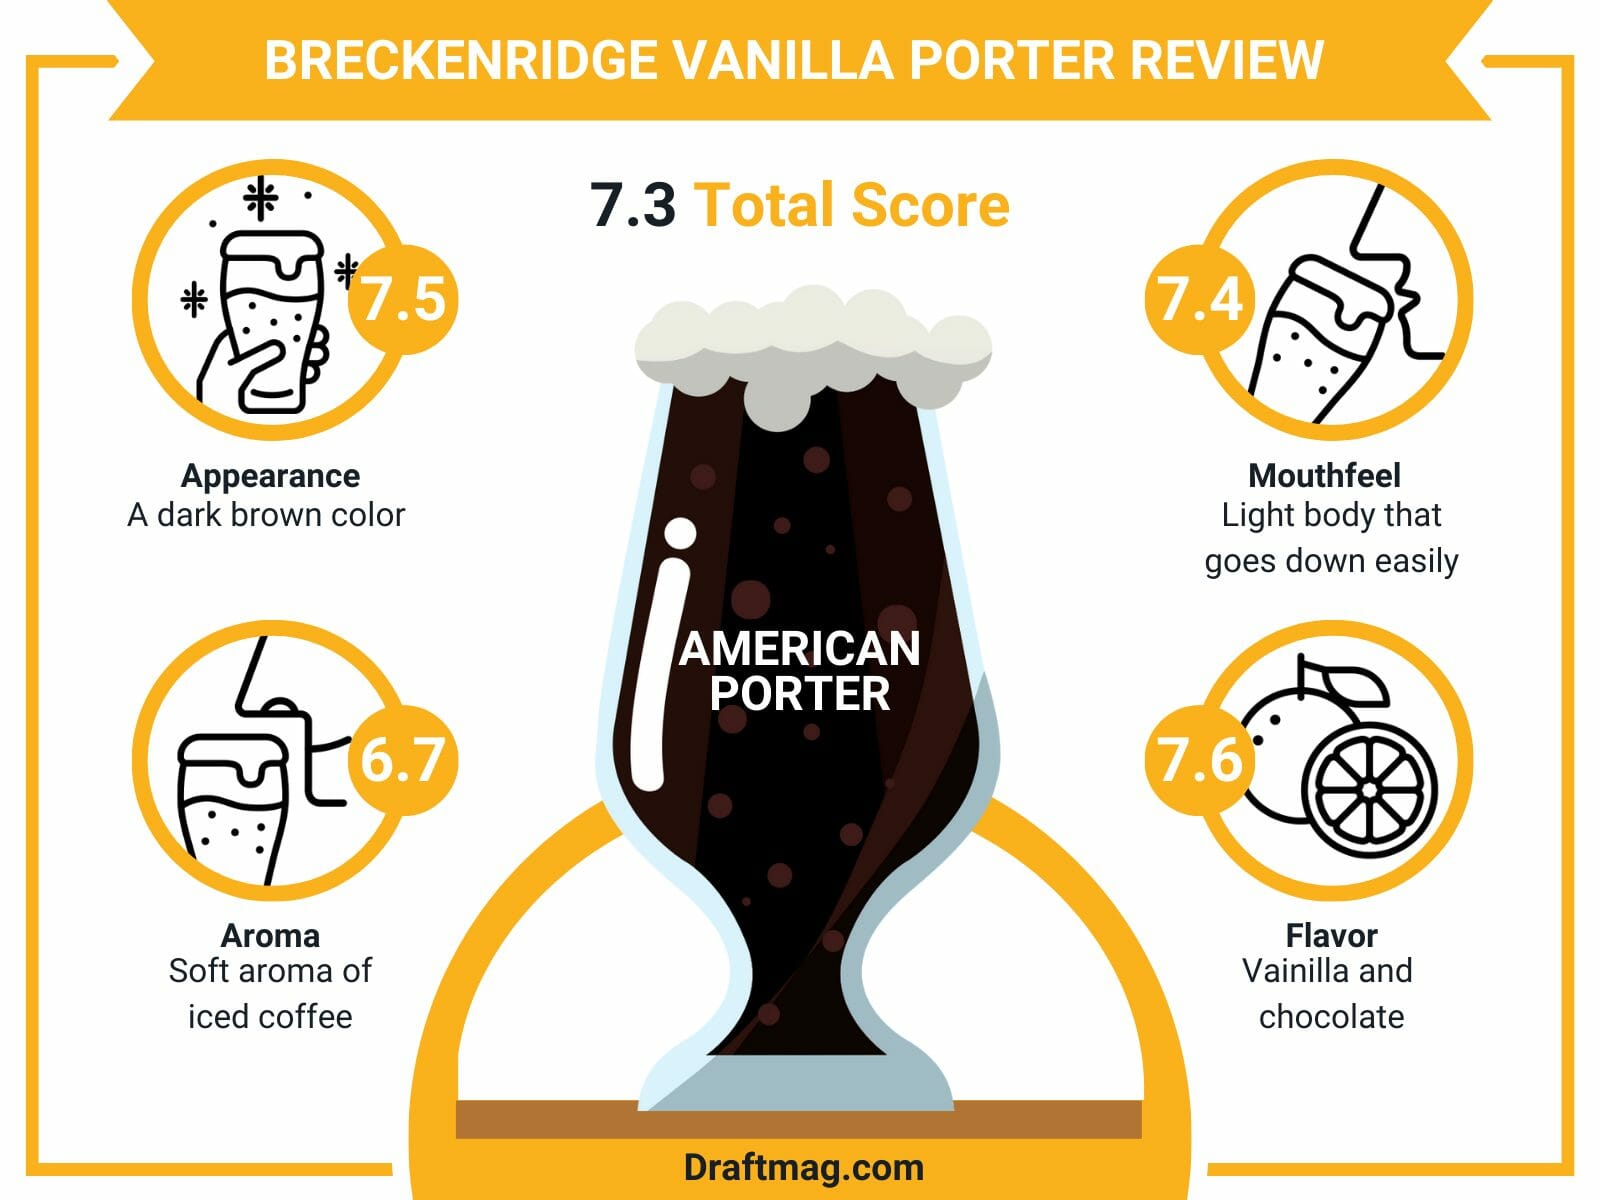 Breckenridge vanilla porter review infographics